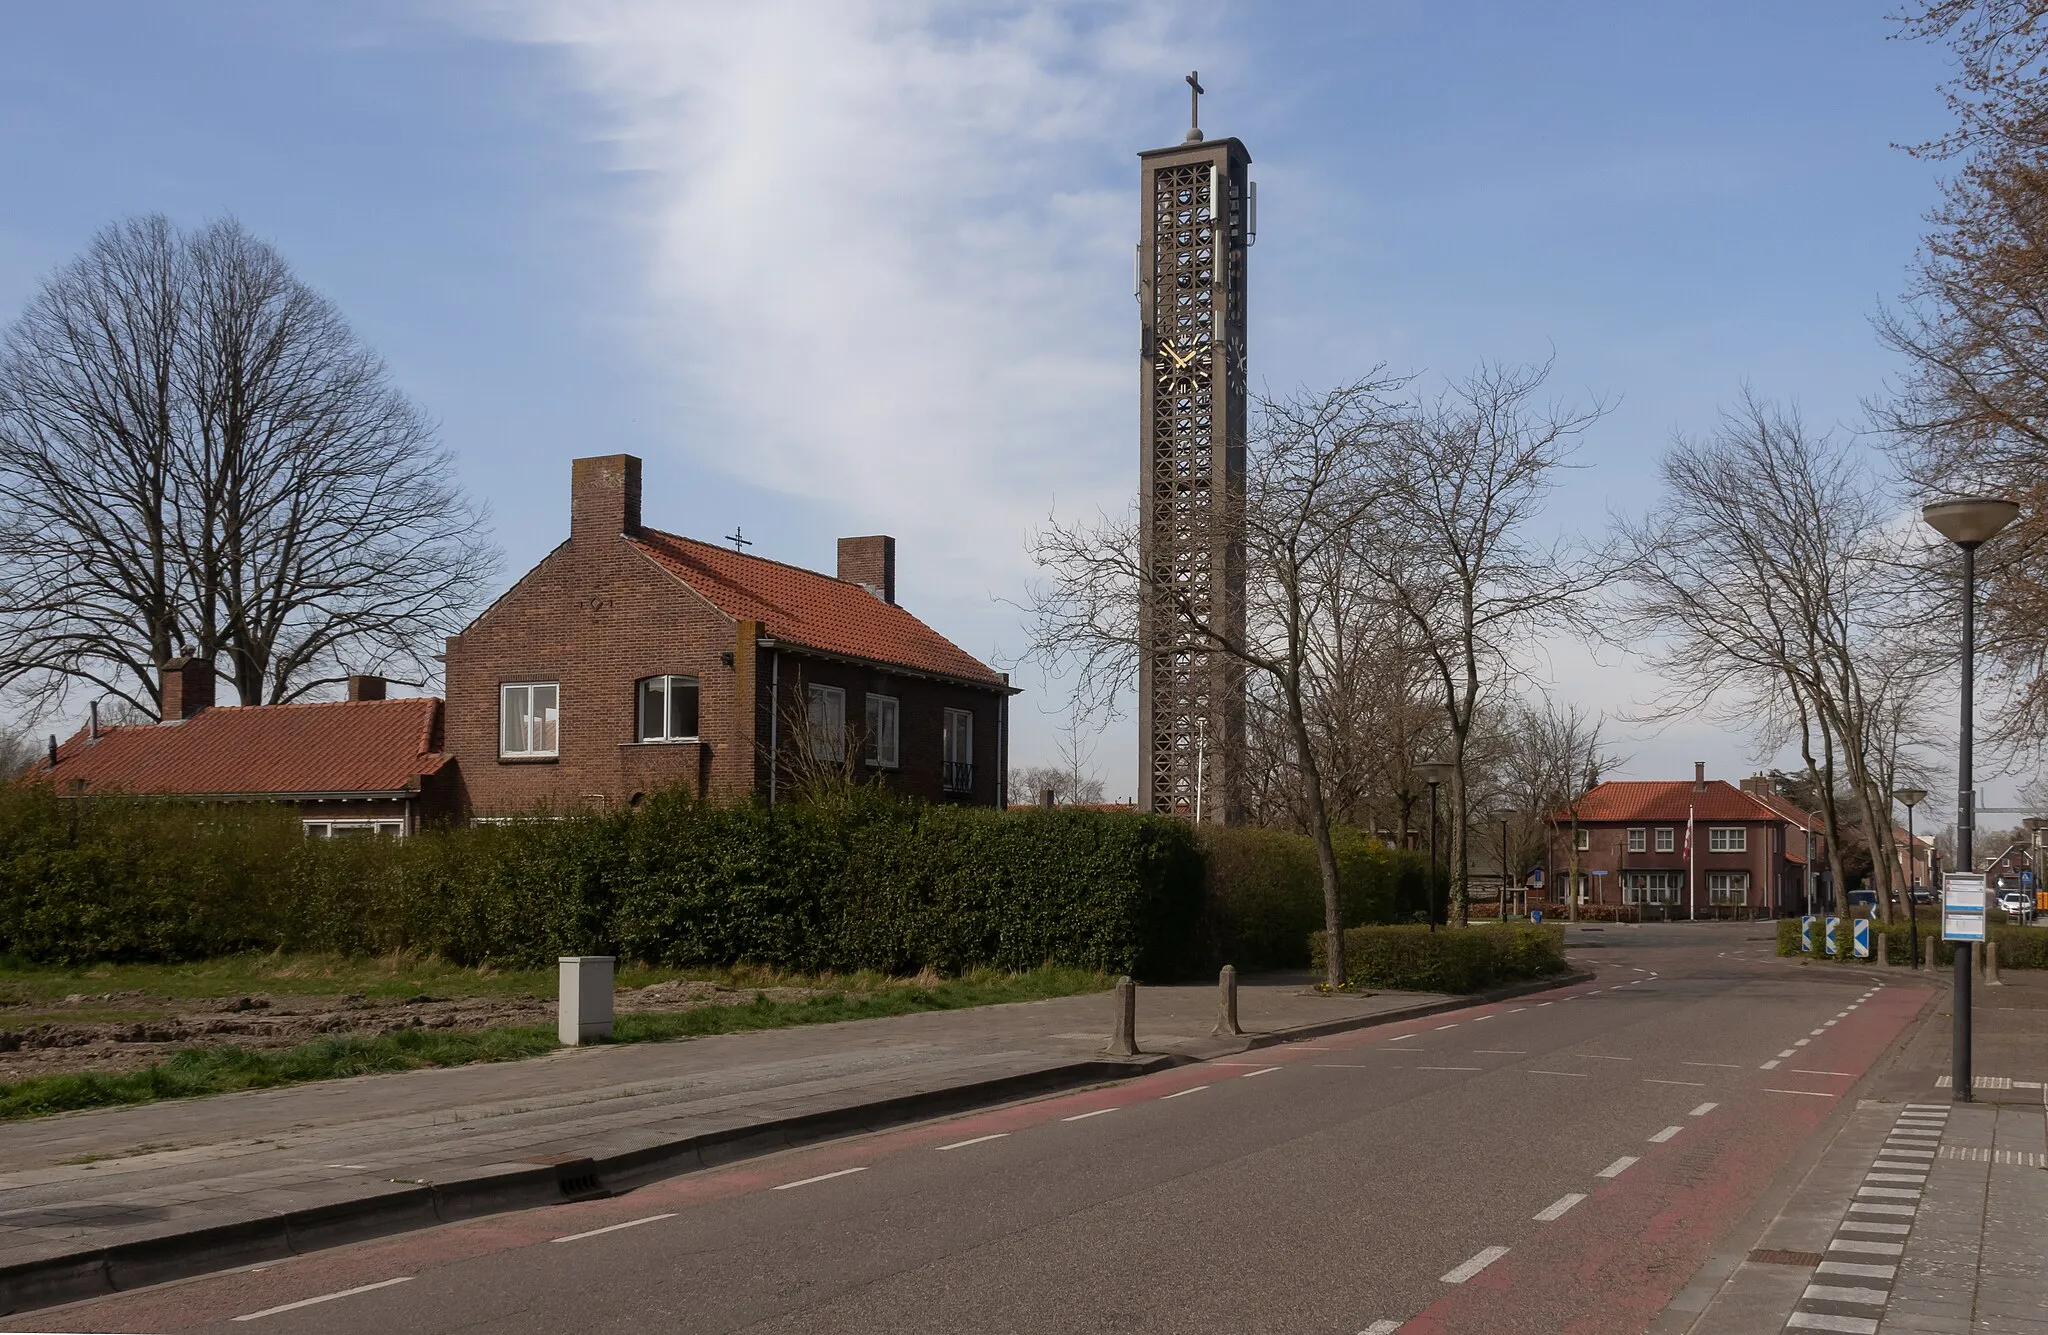 Photo showing: Moerdijk, the center of the village